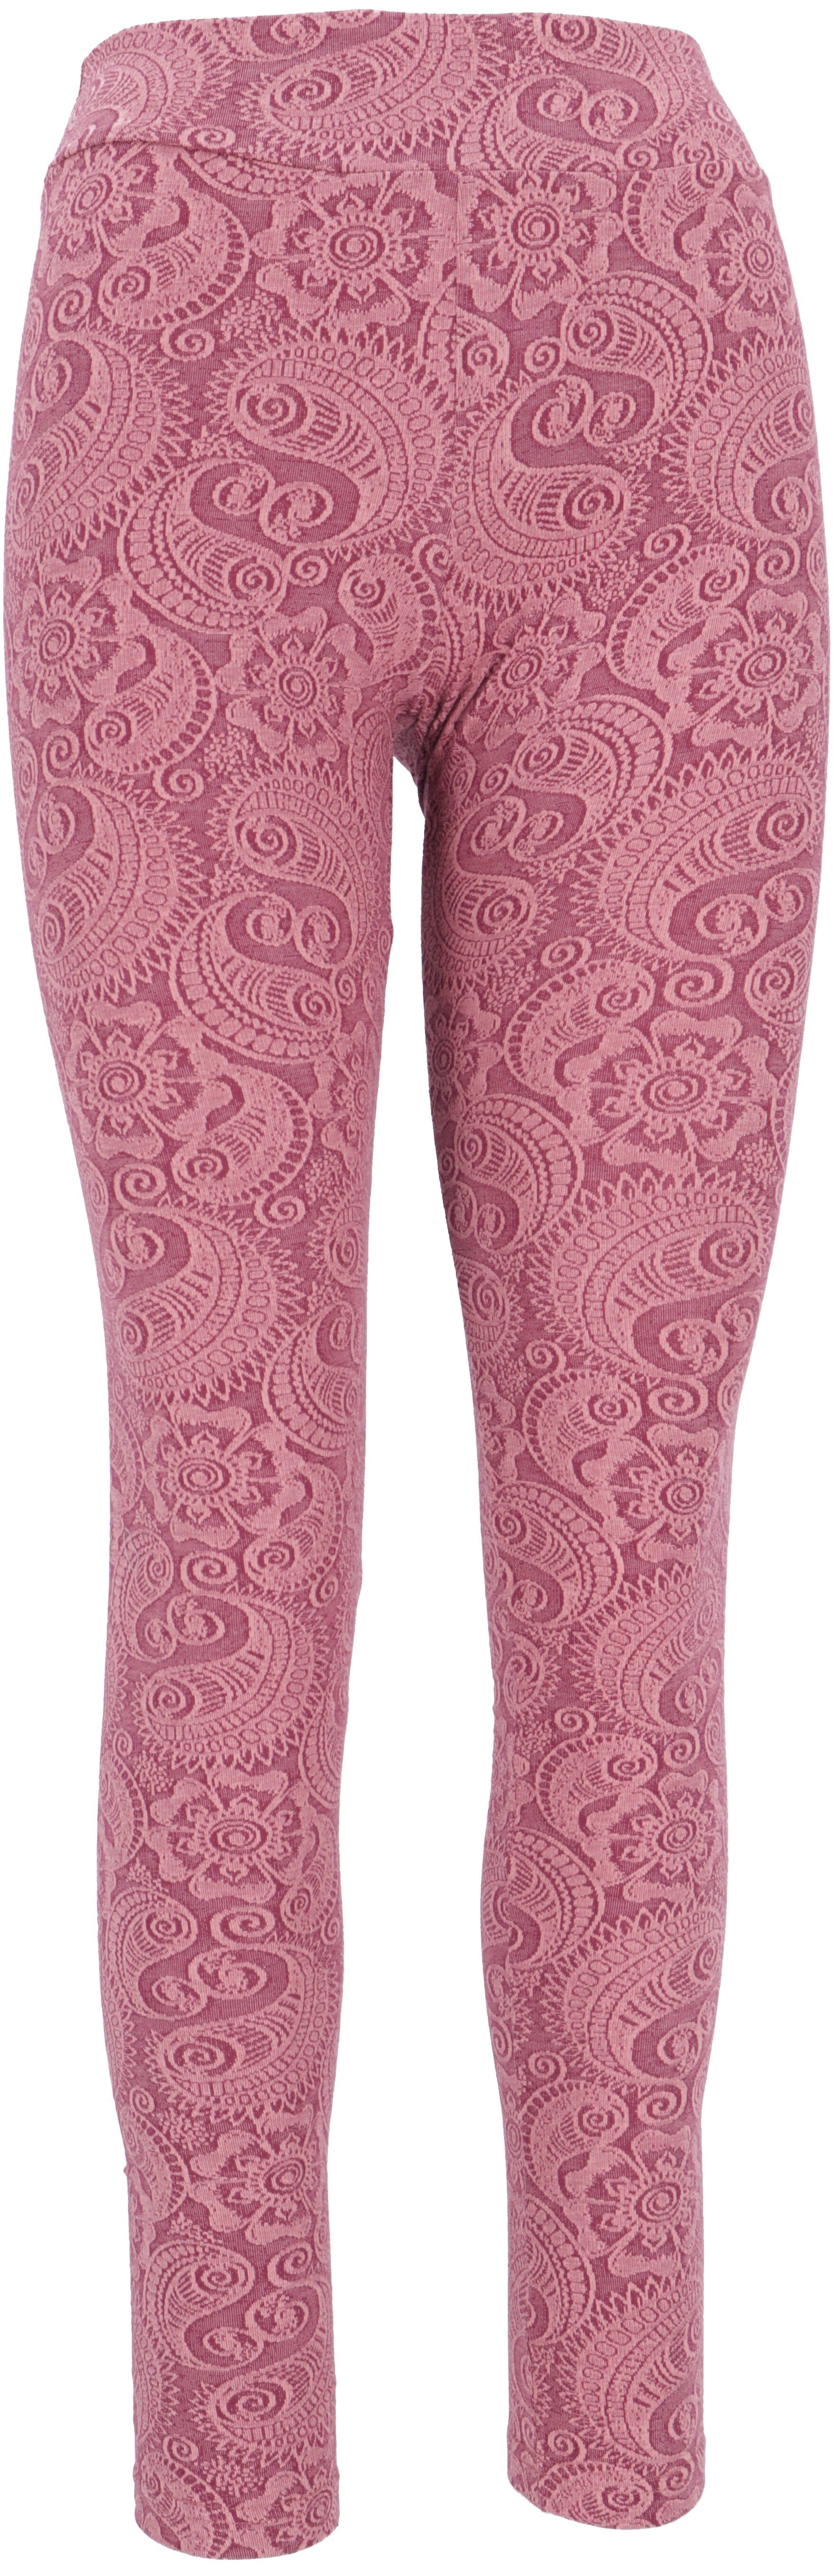 Guru-Shop Hose & Shorts Jacquard Yoga-Hose, Yoga Paisley Leggings.. alternative Bekleidung